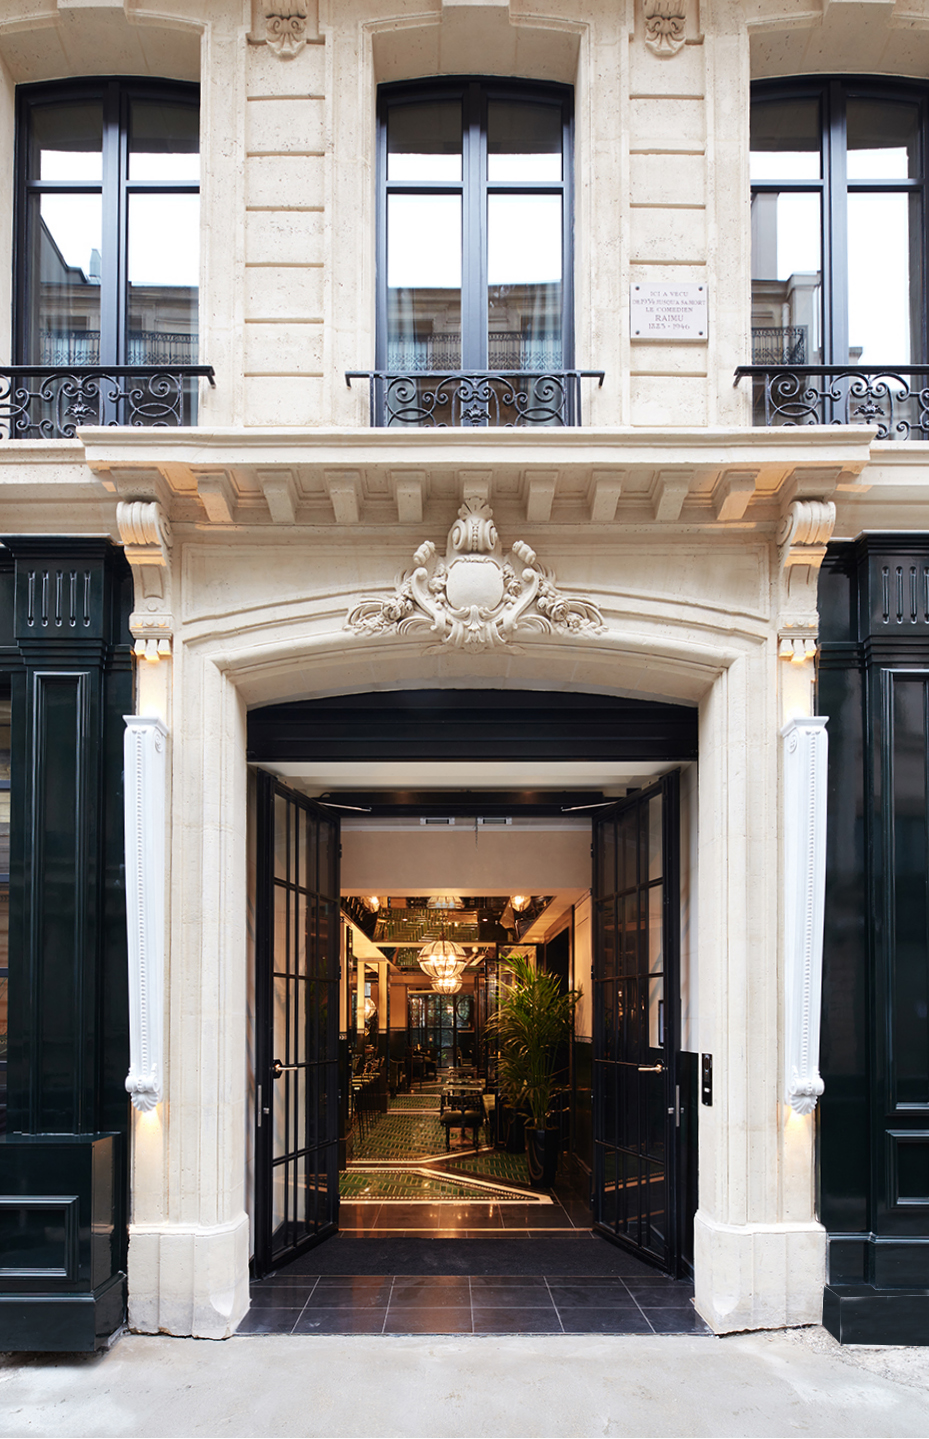 Street entrance to Monsieur George's Galanga Restaurant in Effect Magazine